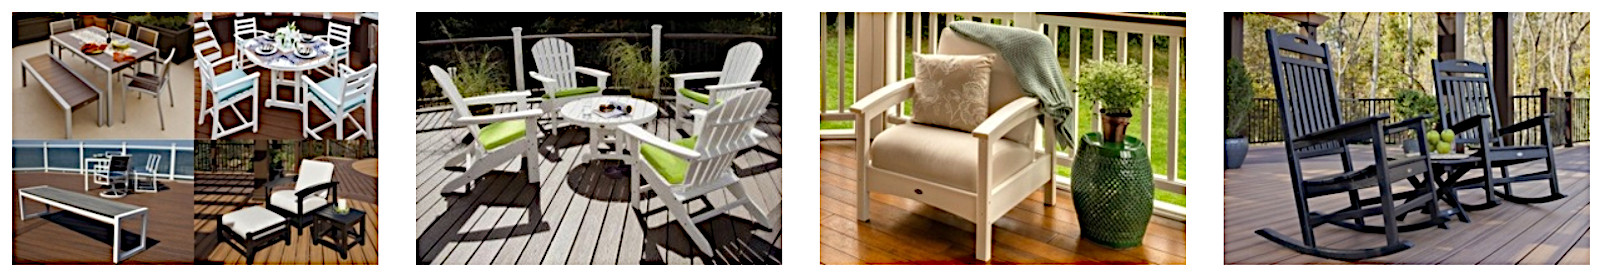 Enhanced Trex outdoor furniture